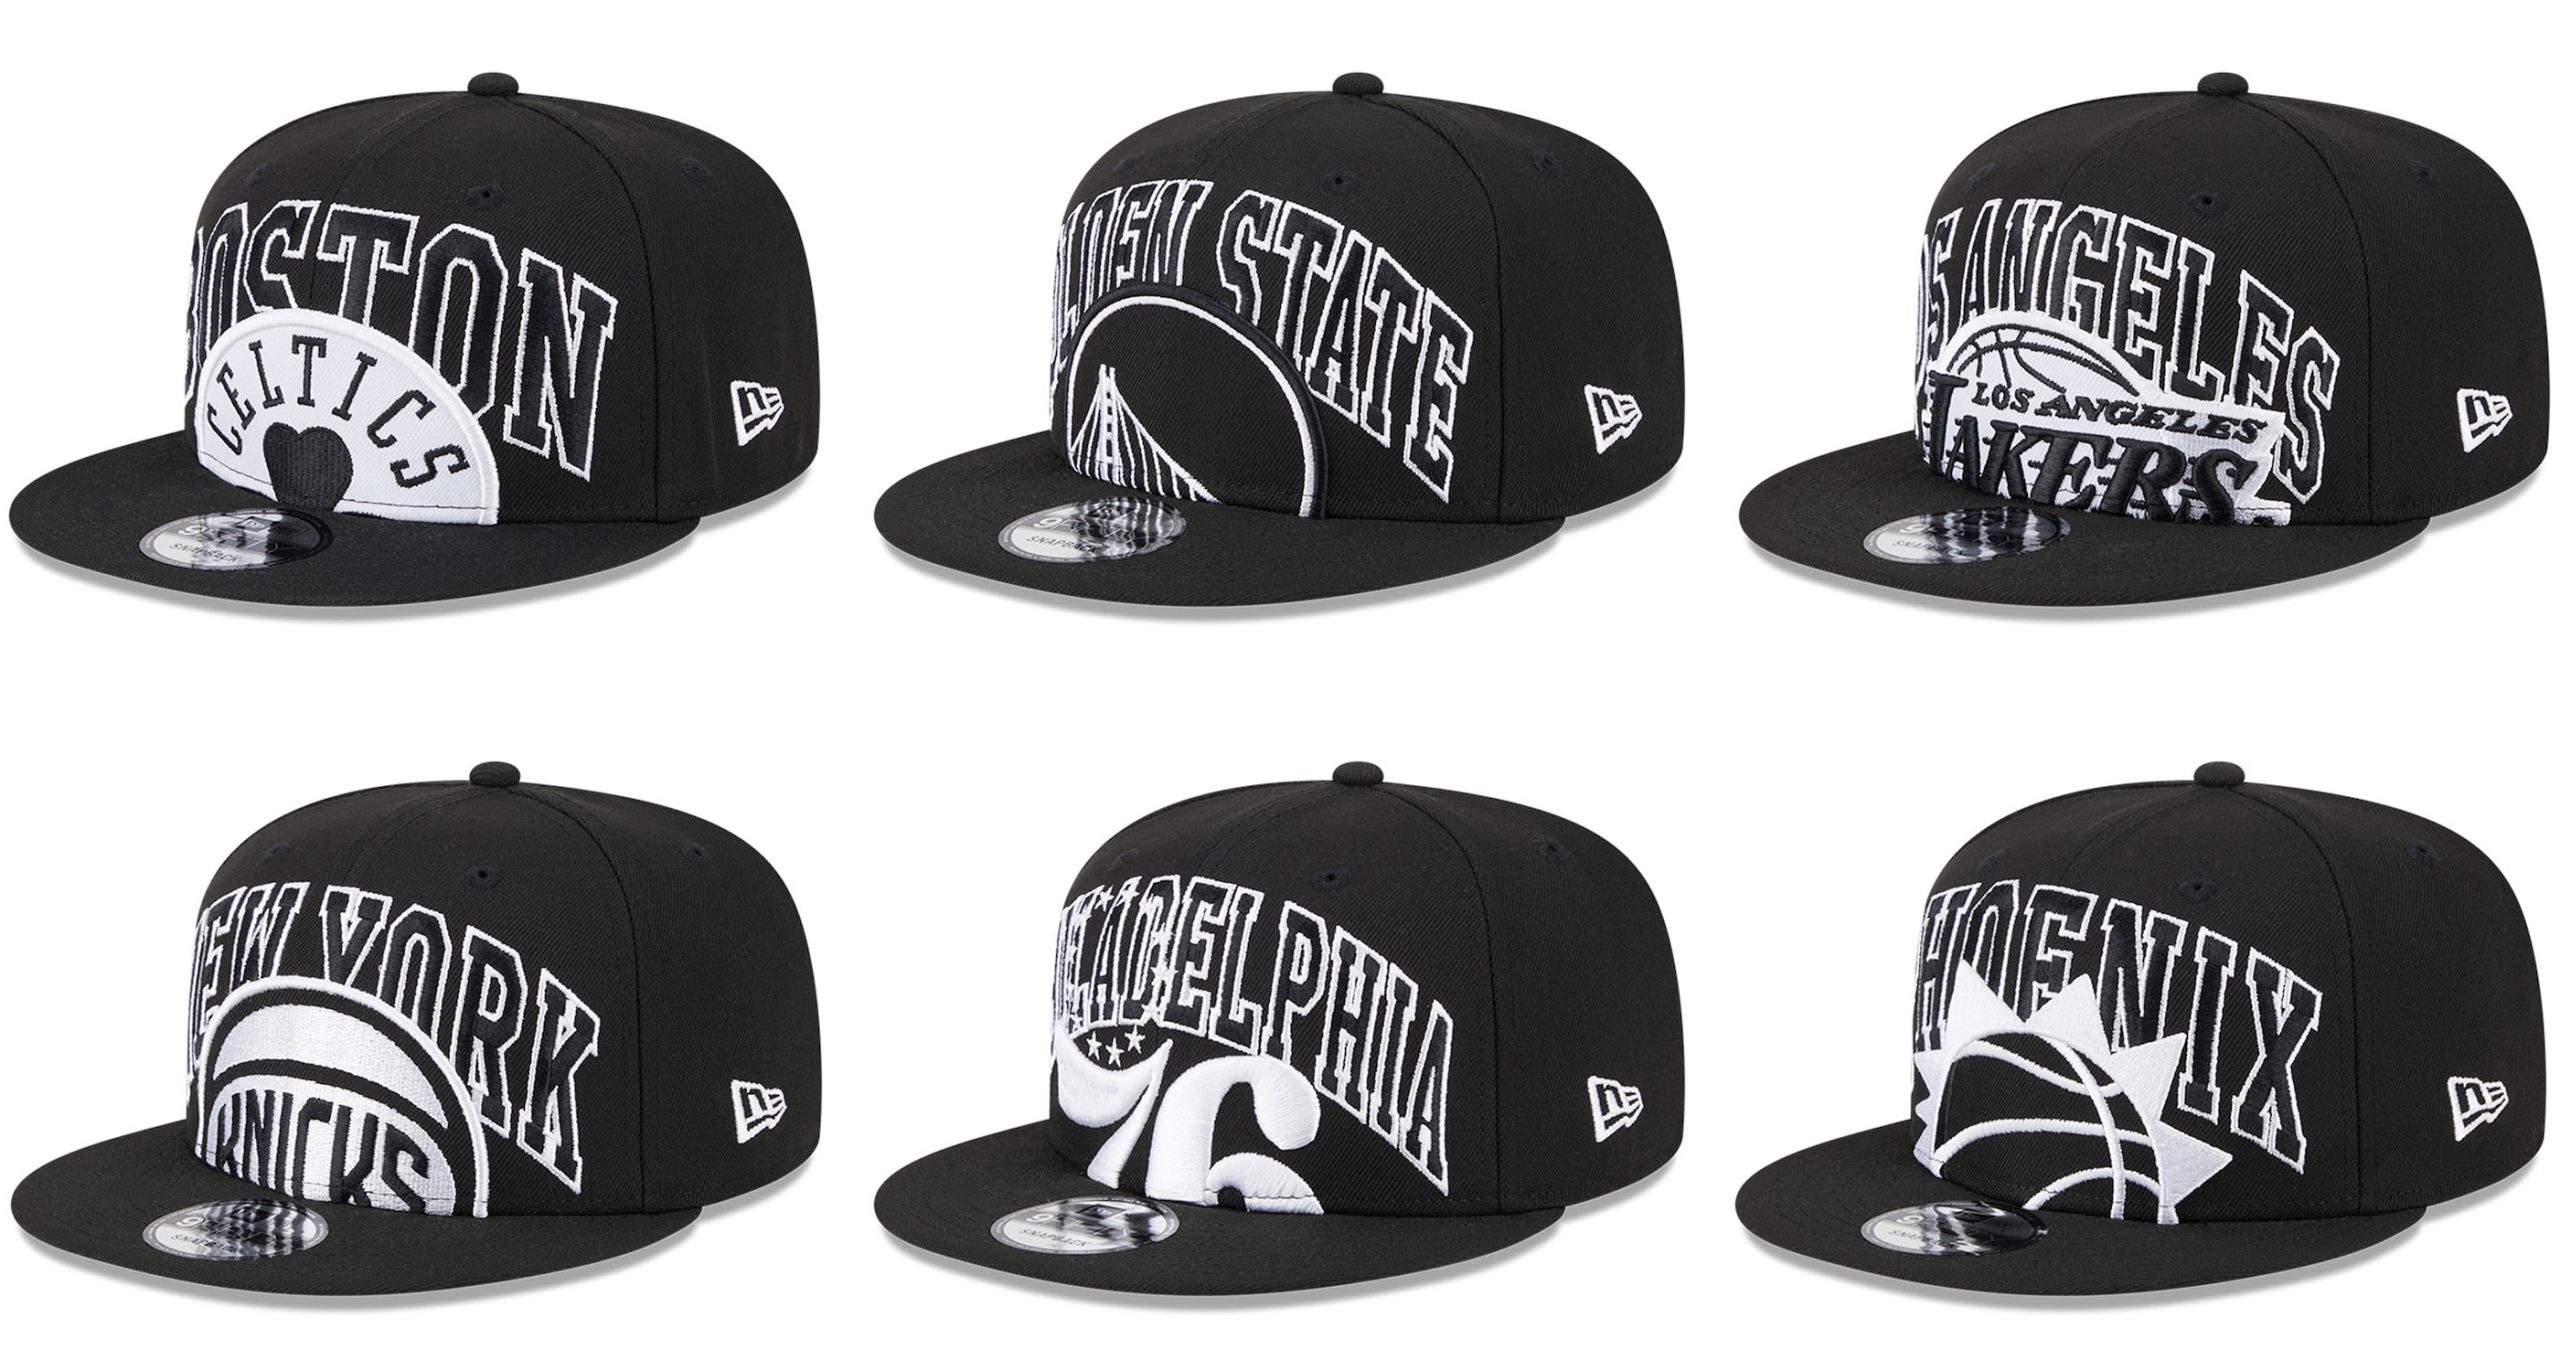 New-Era-NBA-Tip-Off-Black-White-Snapback-Hats